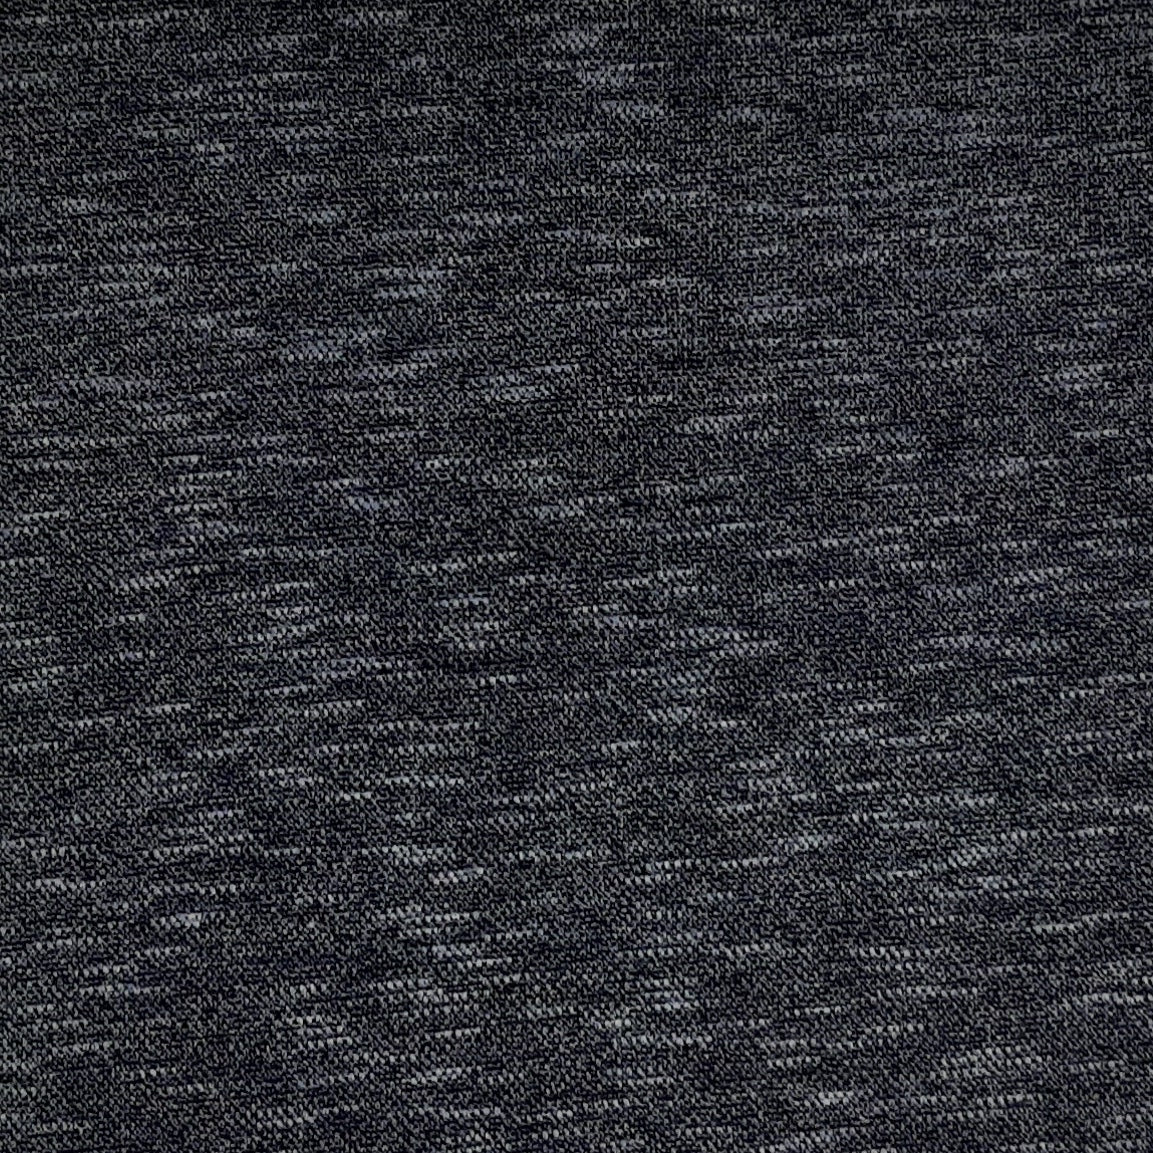 Black Iris Sweater Knit RZ Solid